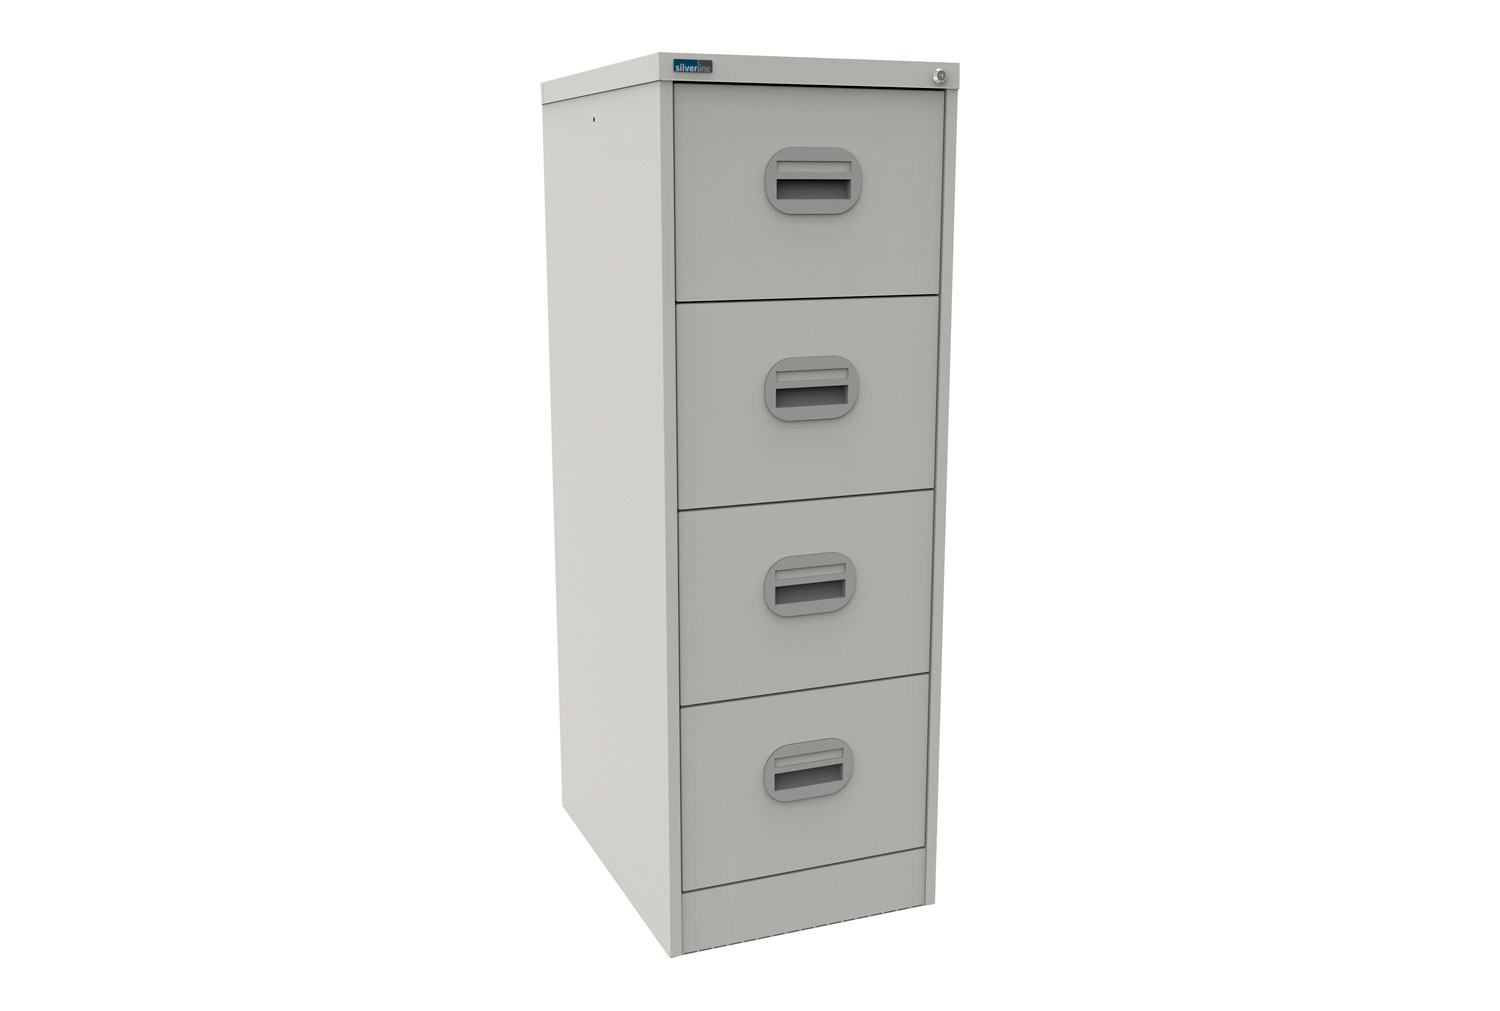 Silverline Kontrax 4 Drawer Filing Cabinet, 4 Drawer - 46wx62dx132h (cm), Traffic White, Fully Installed